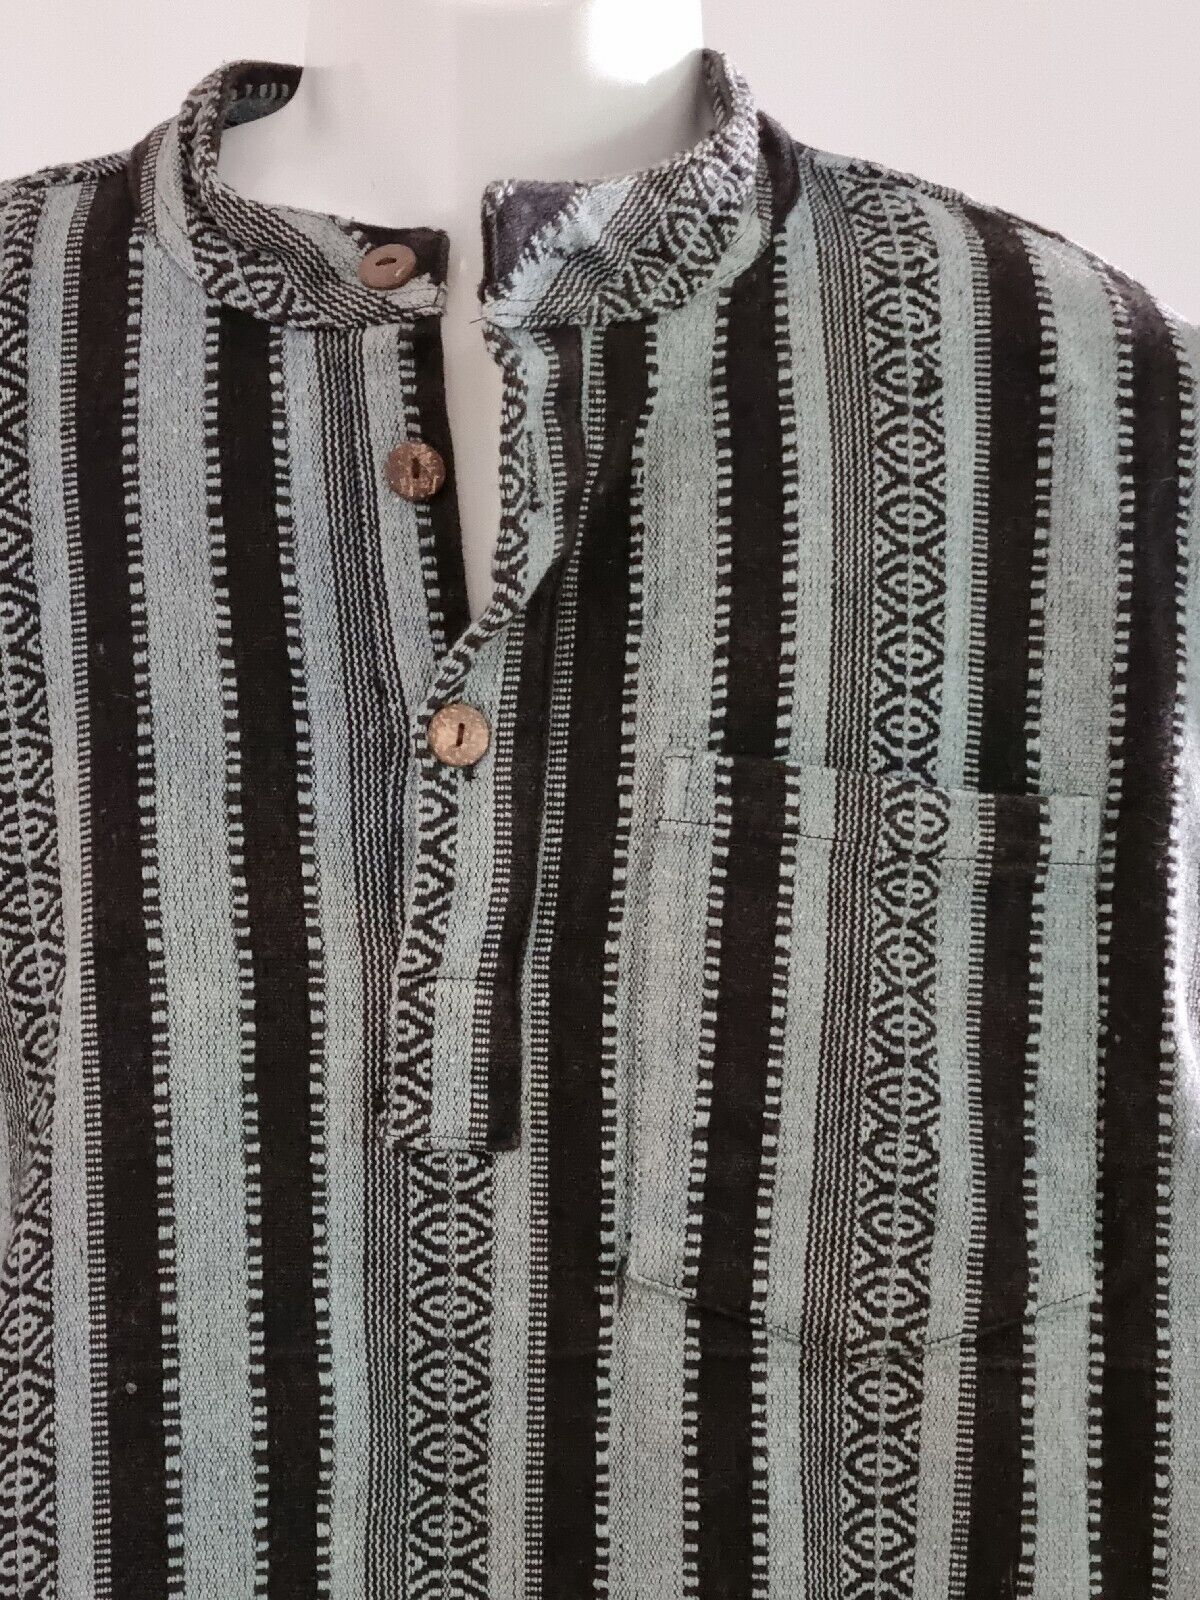 Shirt Men's winter woven heavy Cotton Nepal long sleeve Top